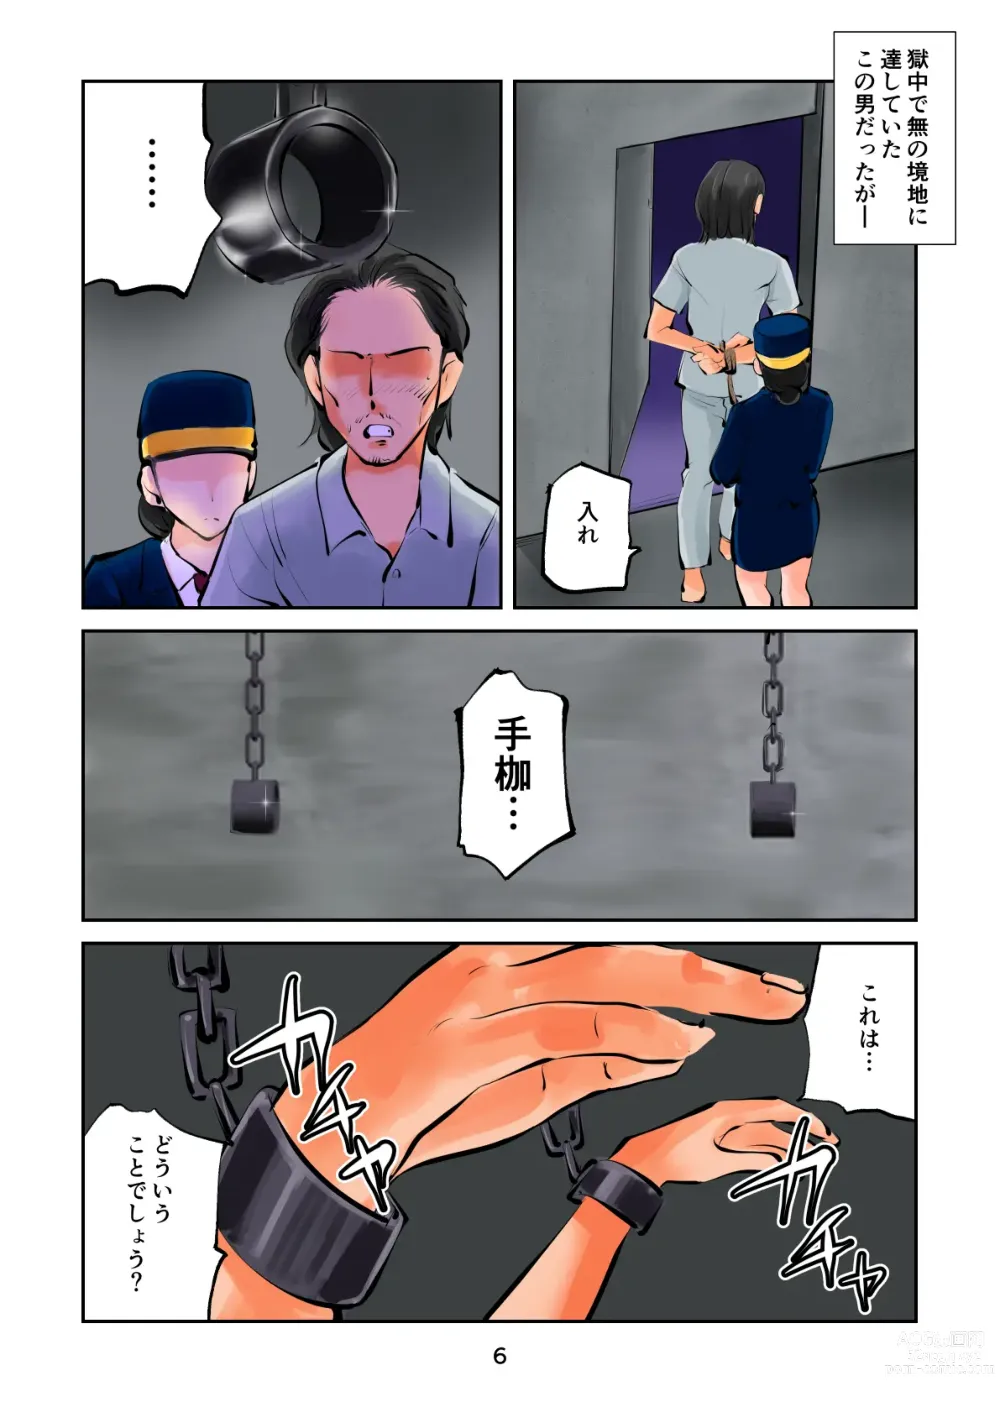 Page 6 of doujinshi The Kyokkei Shokei Houhou wa Tamatsubushi